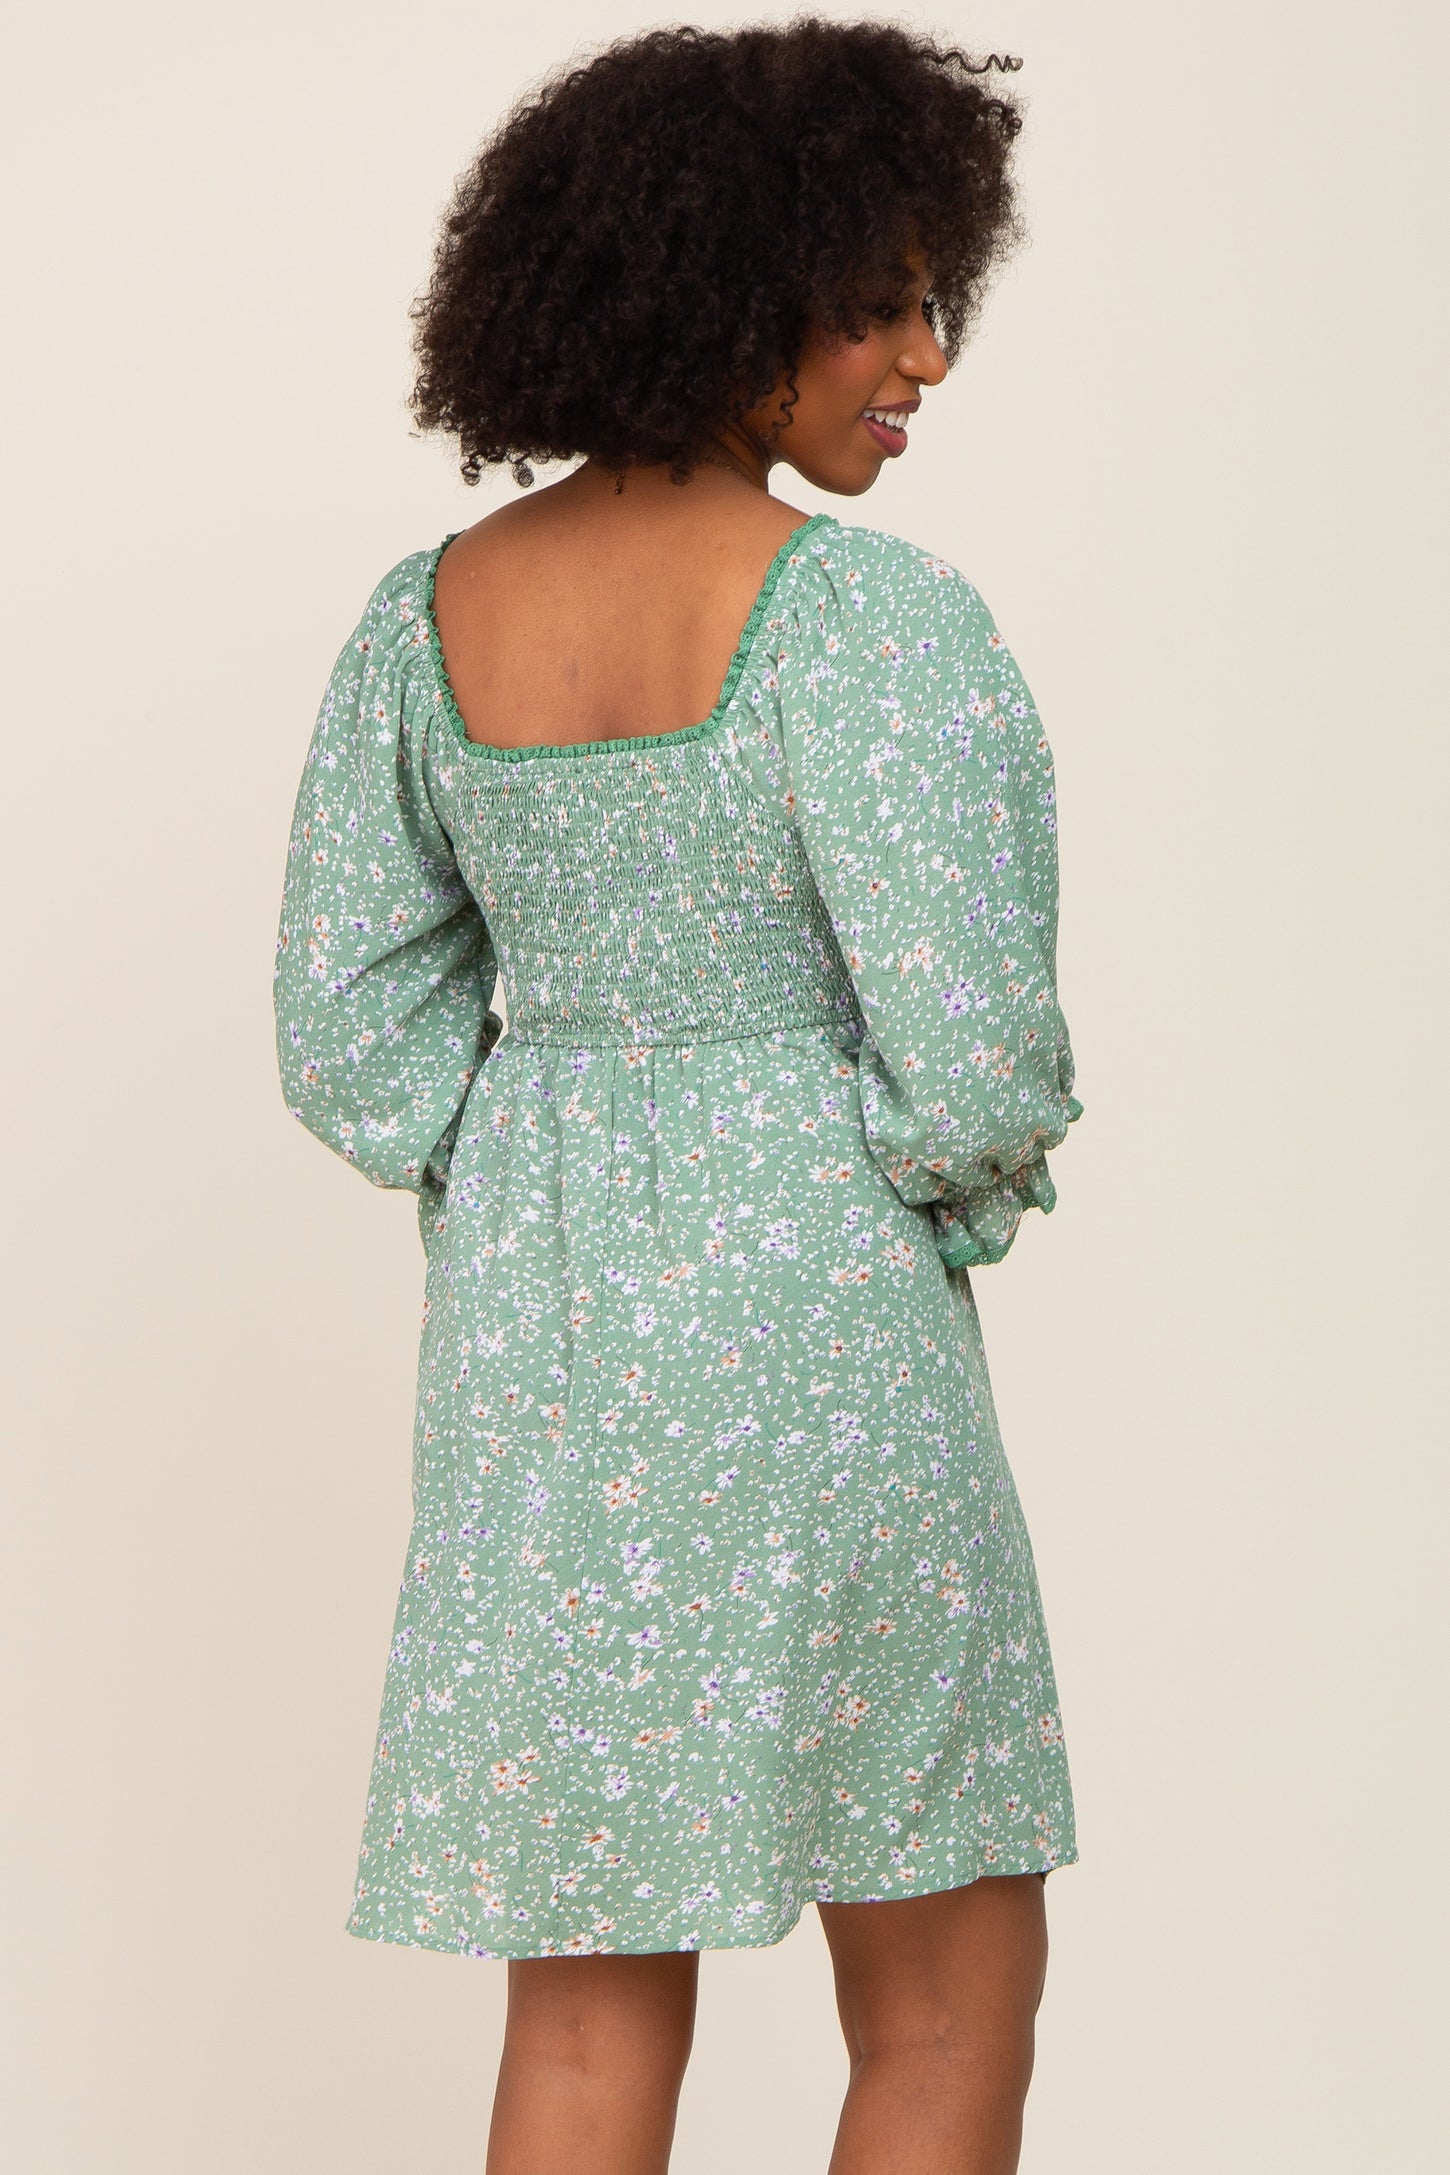 Mint Floral 3/4 Sleeve Dress